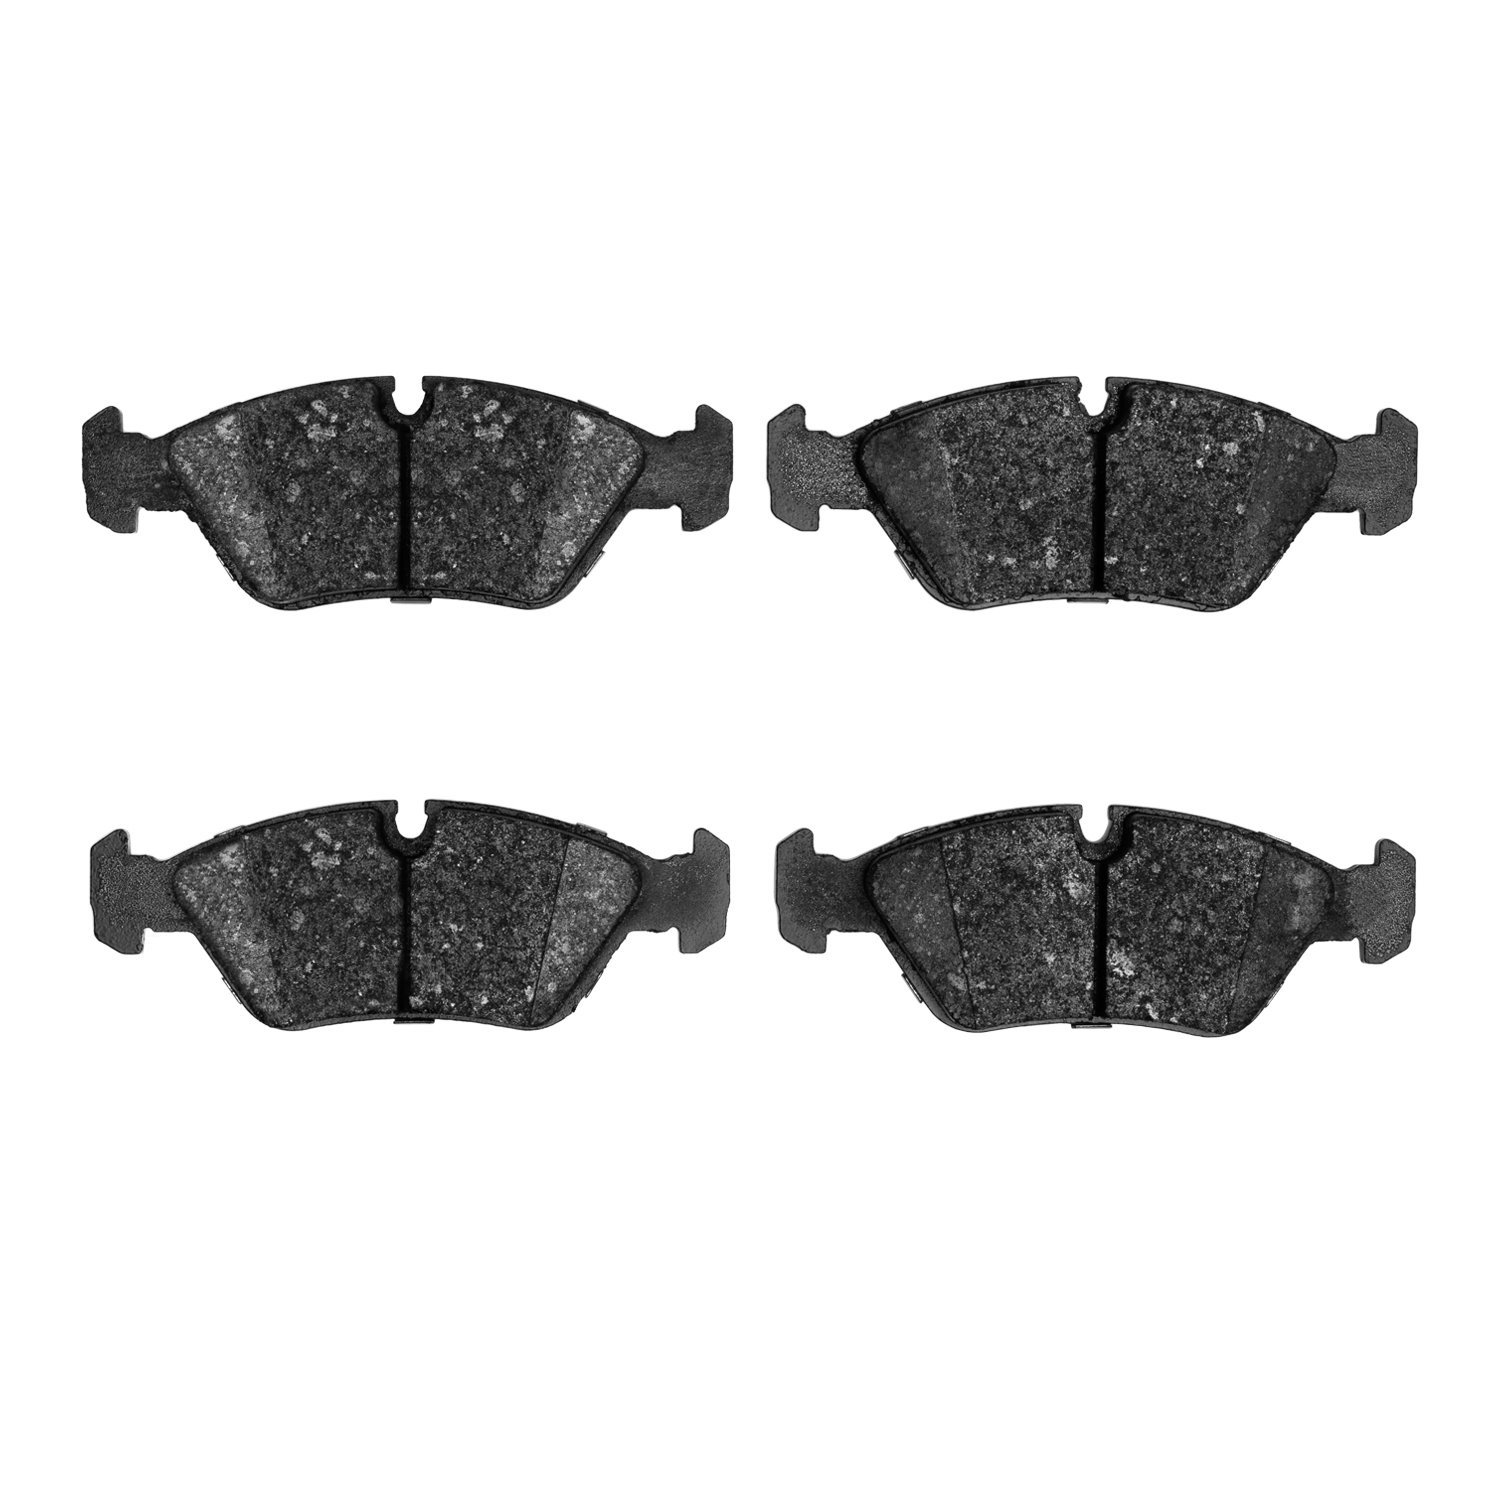 Semi-Metallic Brake Pads, 1982-1993 Fits Multiple Makes/Models, Position: Front